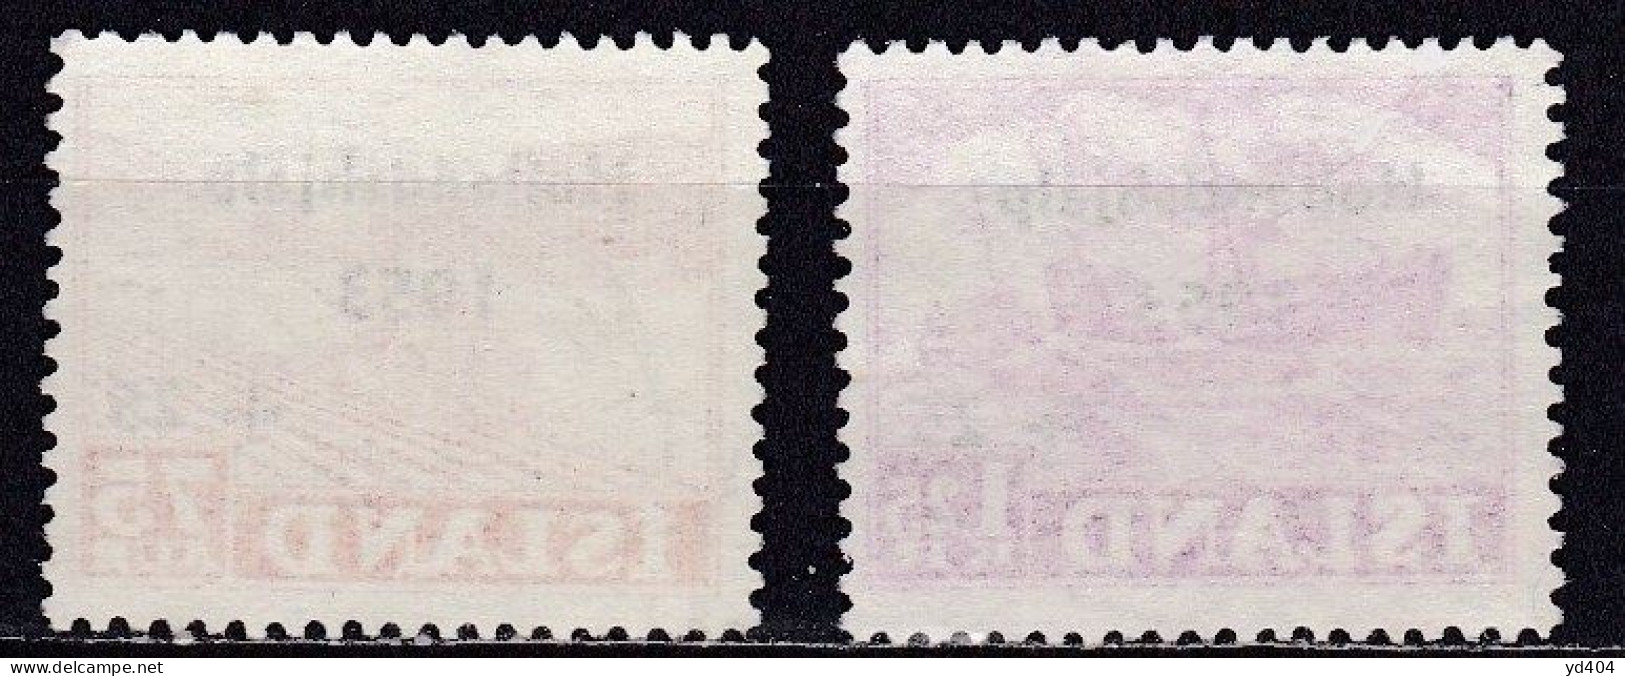 IS056 – ISLANDE – ICELAND – 1953 – RELIEF FUND FOR NETHERLANDS – SC # B12/3 USED - Gebraucht